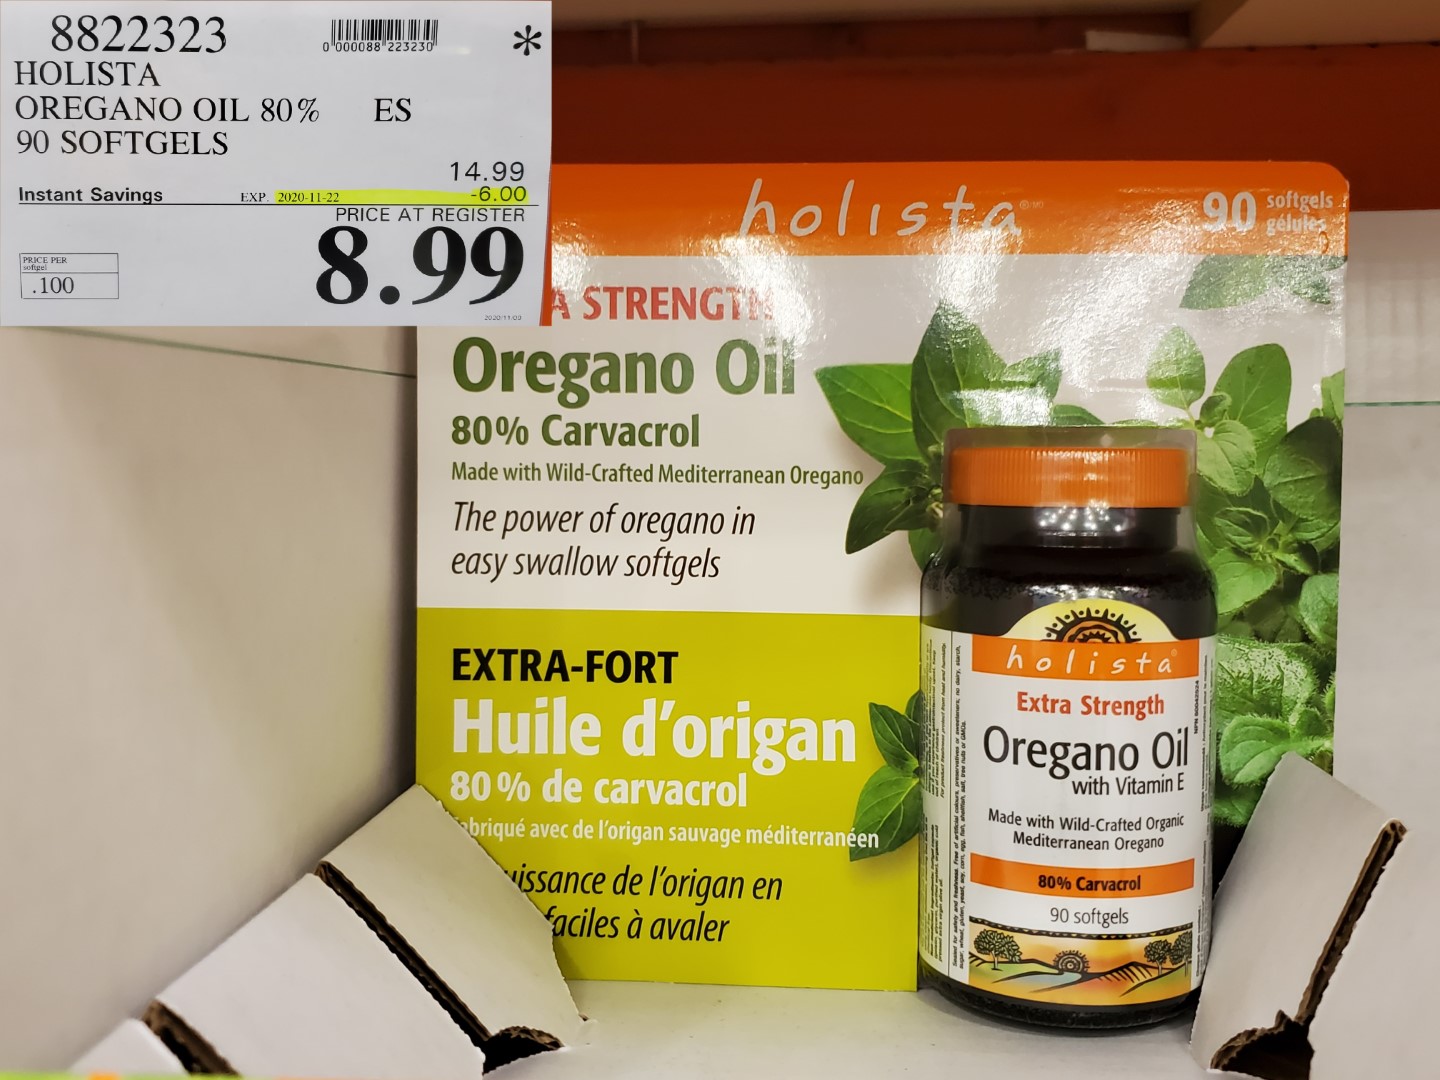 oil of oregano